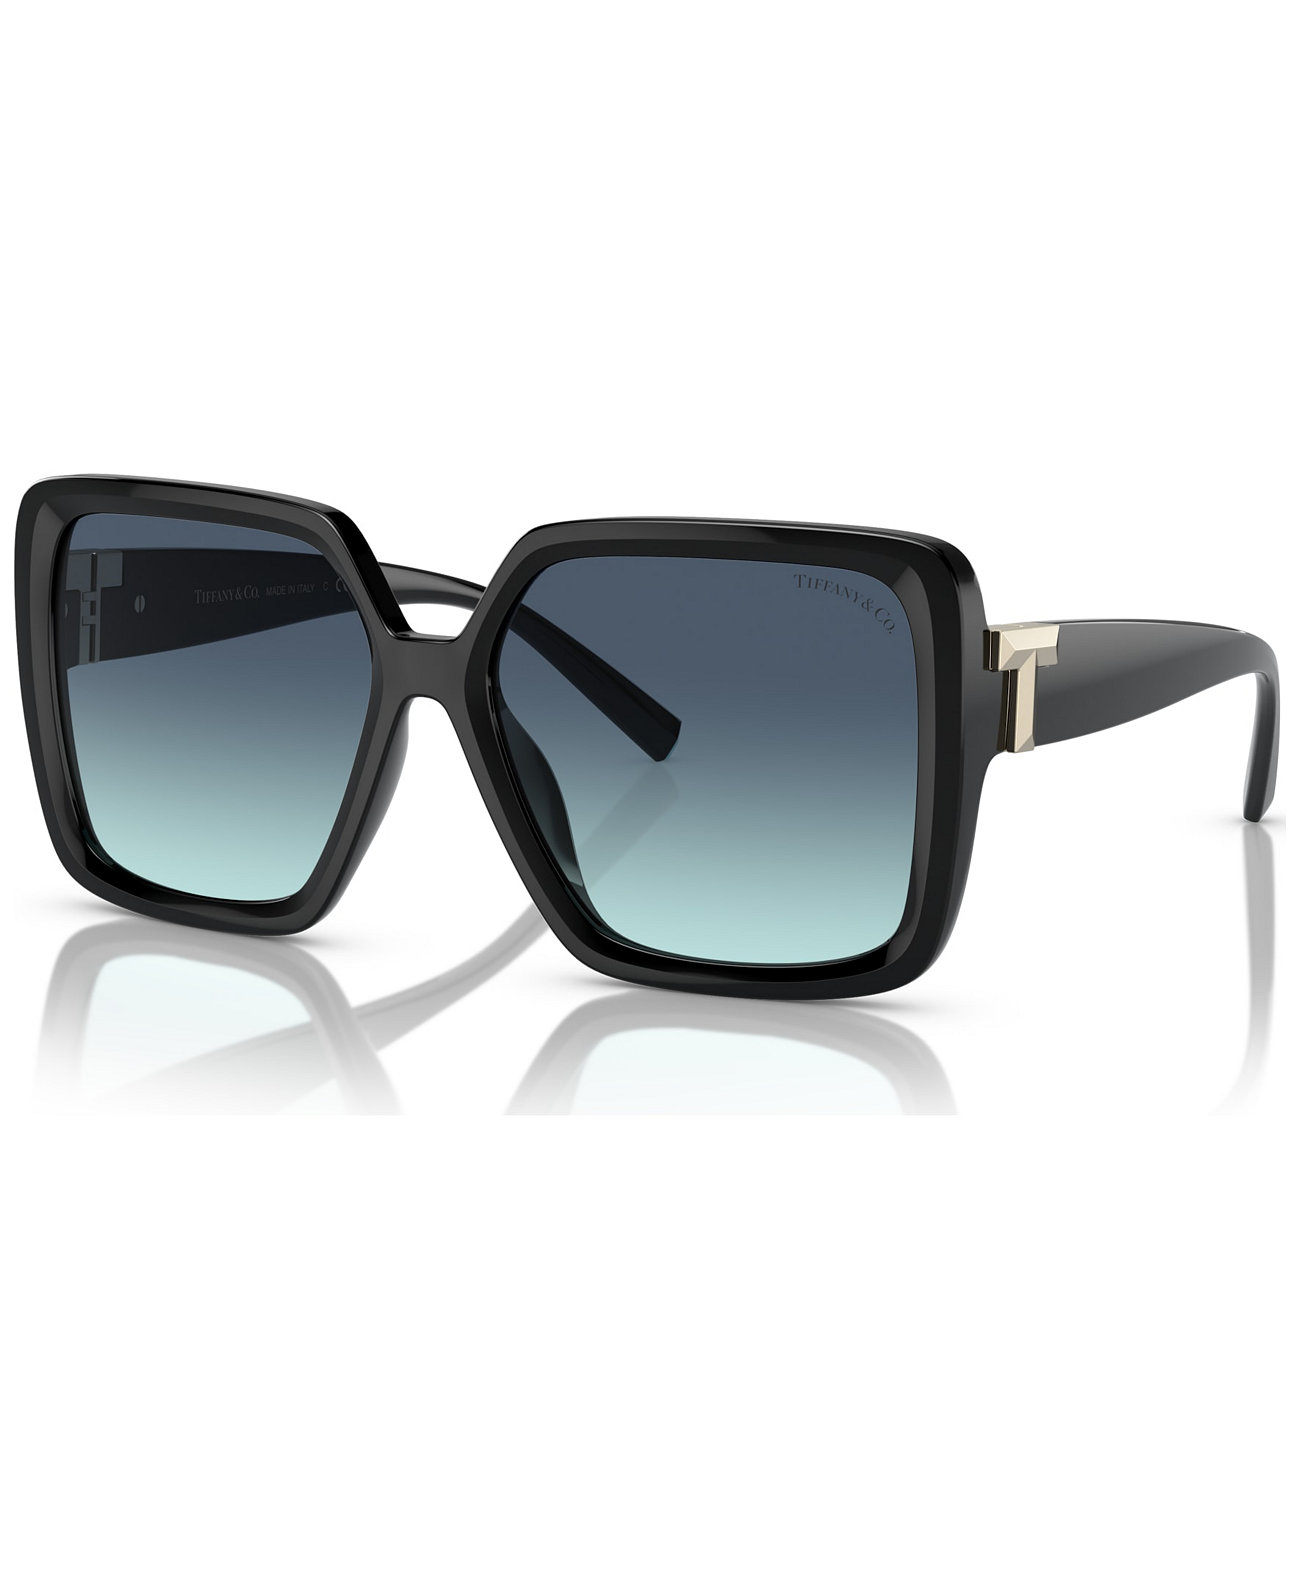 Women's Sunglasses, TF4206U Tiffany & Co.